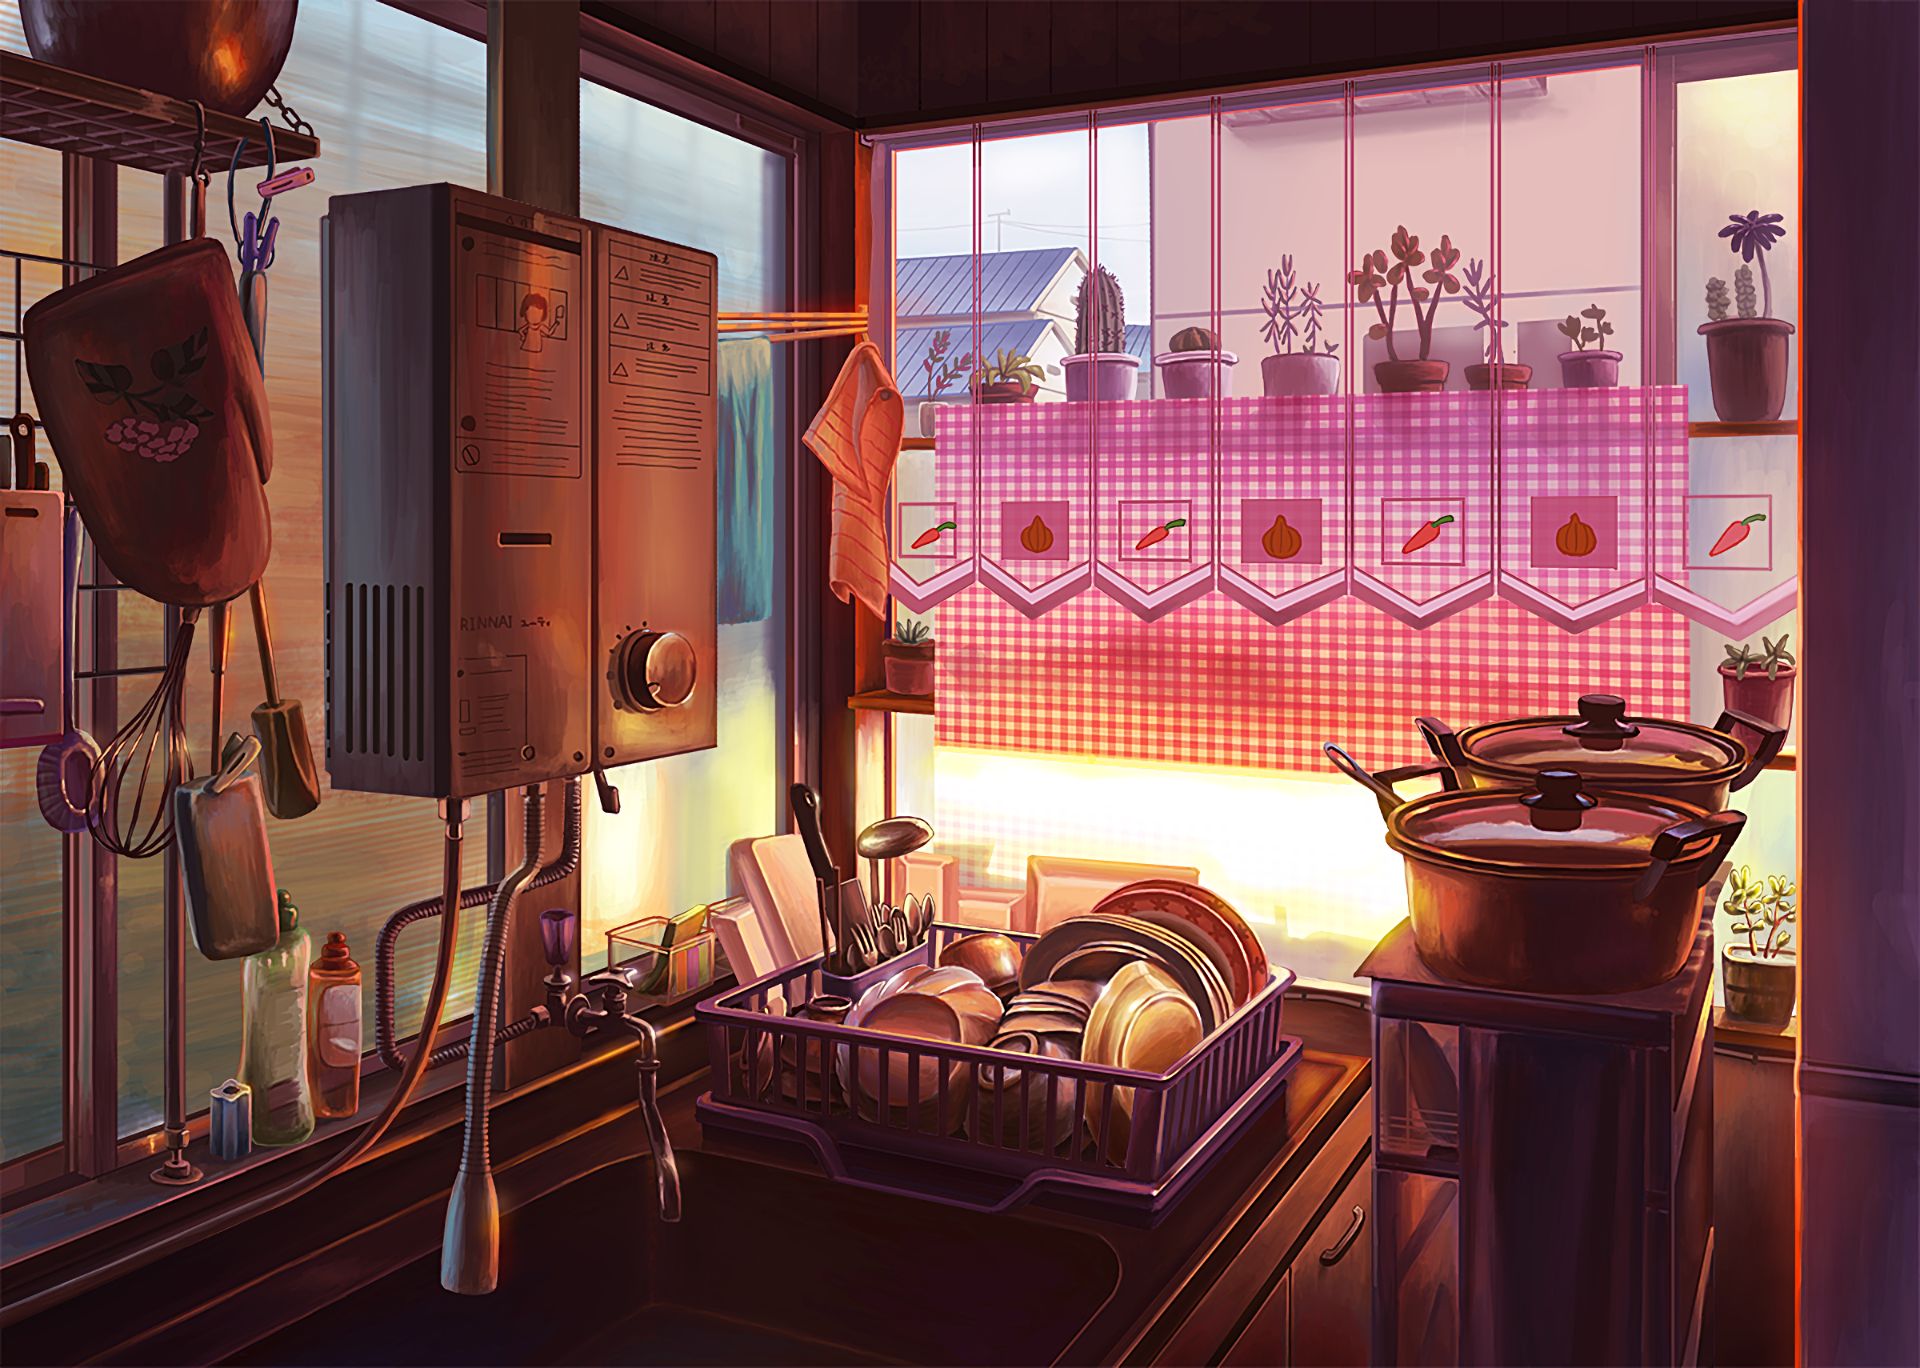 Premium Photo | Anime interior of family kitchen counter with appliances